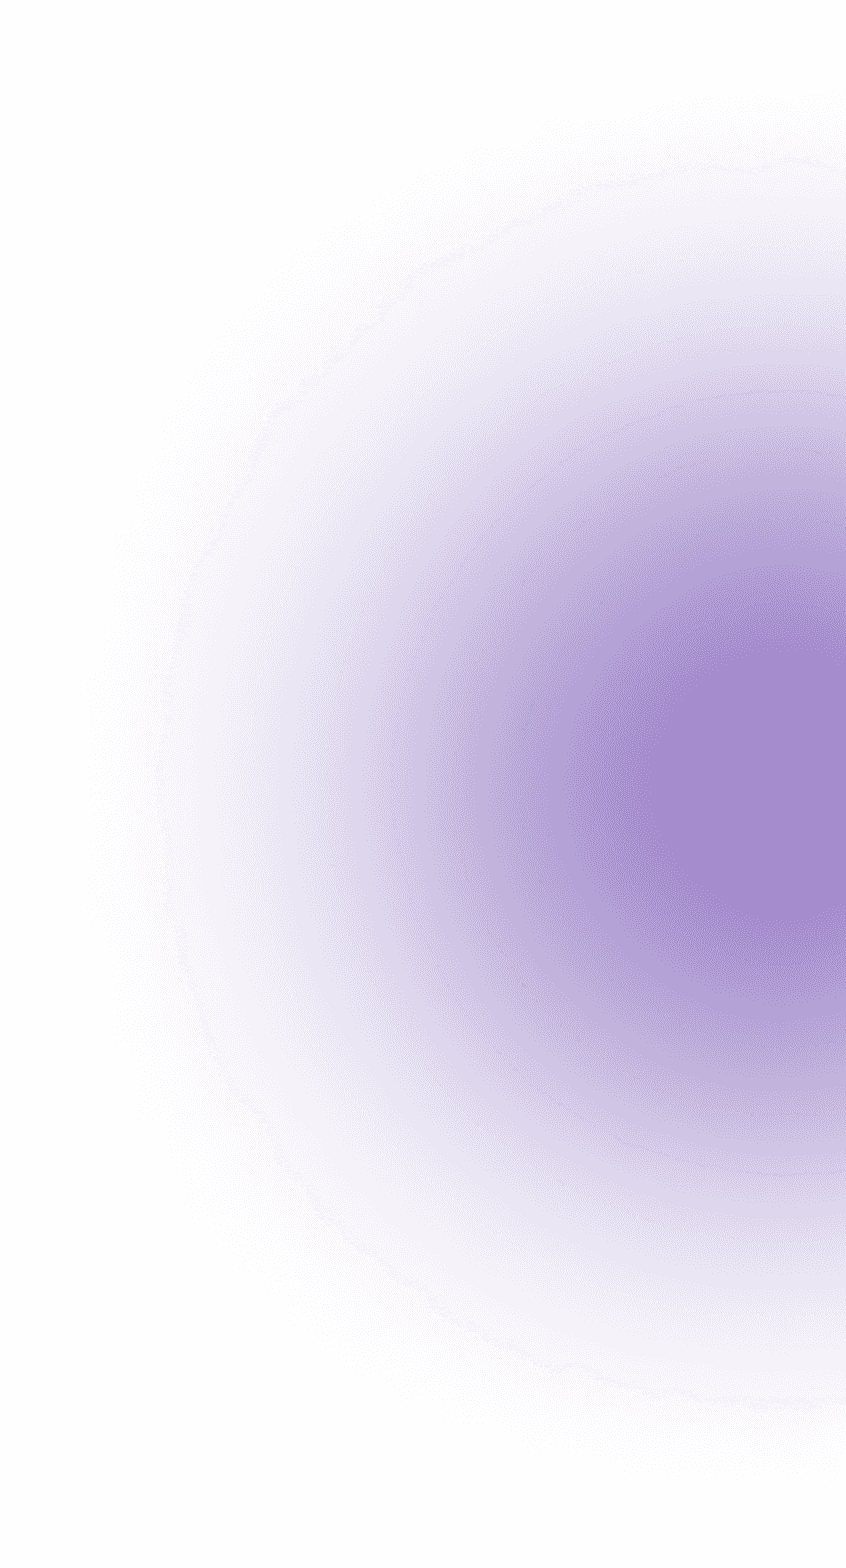 Purple blot background